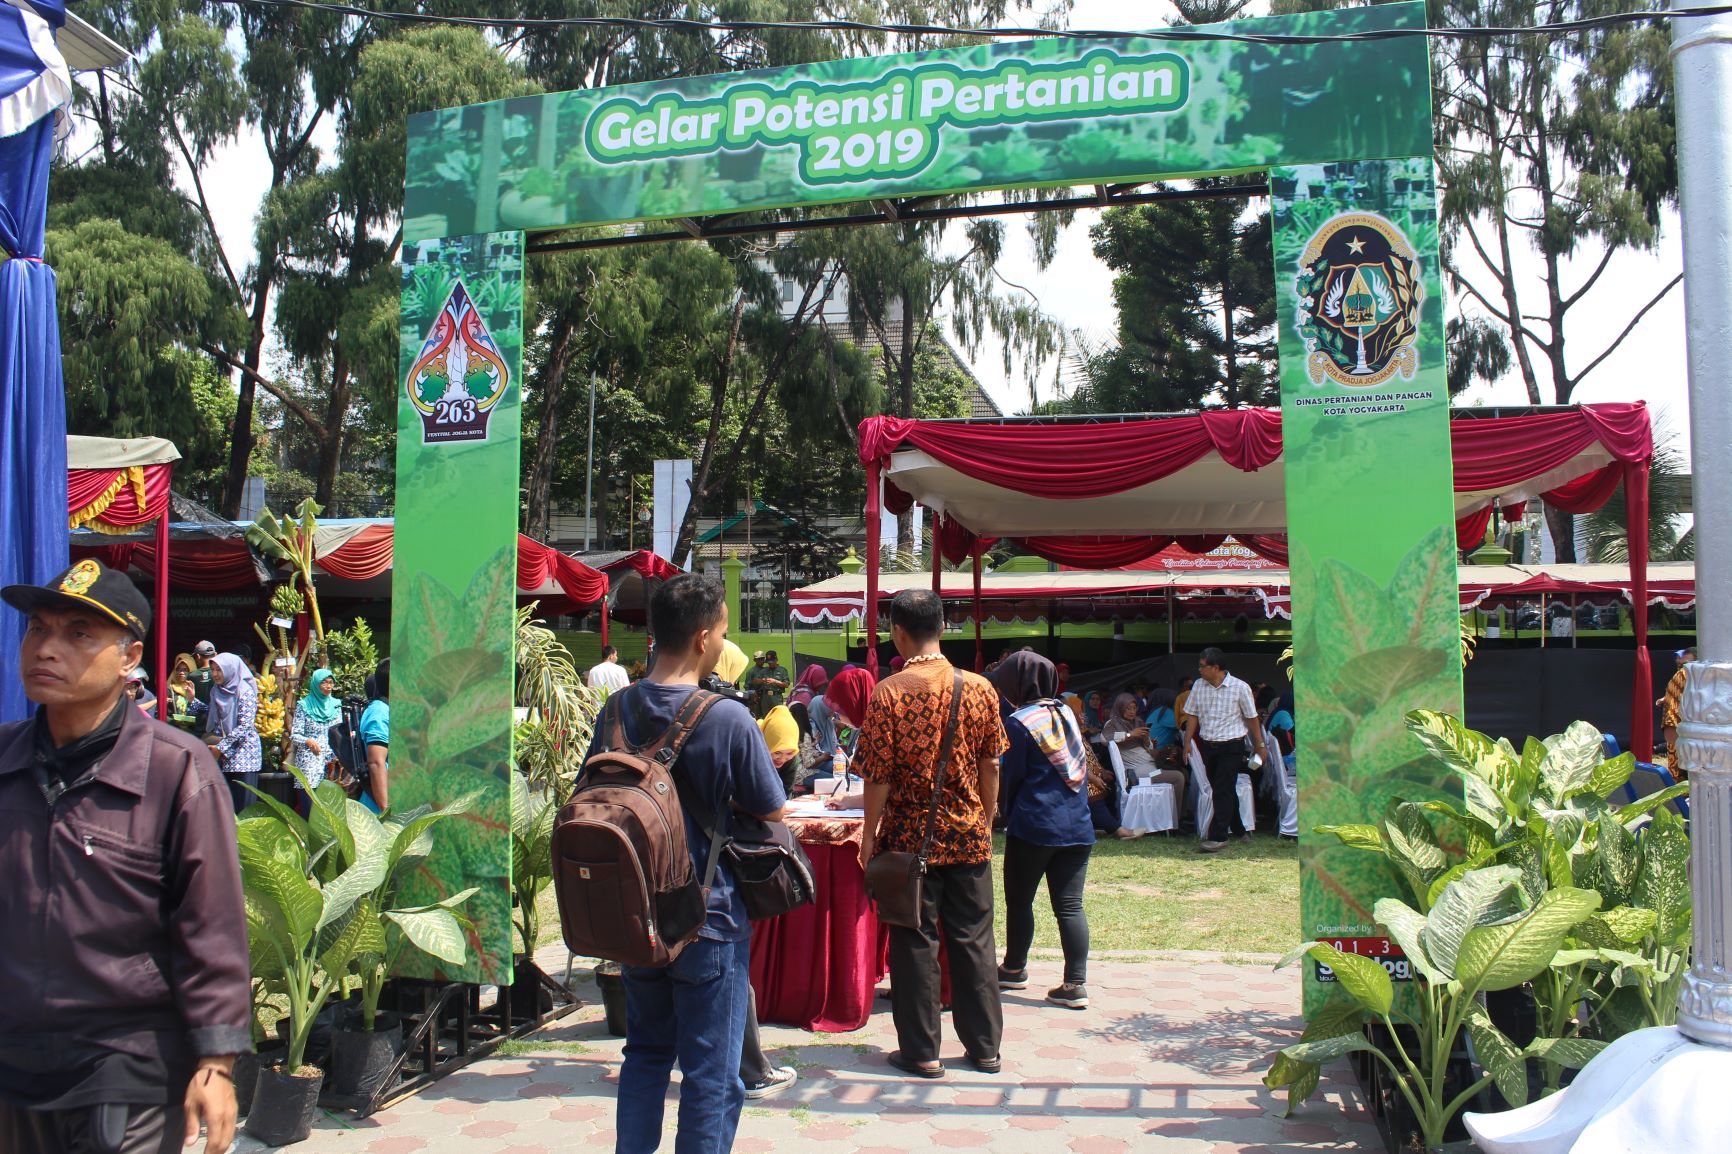 Gelar Potensi Pertanian dan Pangan Kota Yogyakarta Tahun 2019